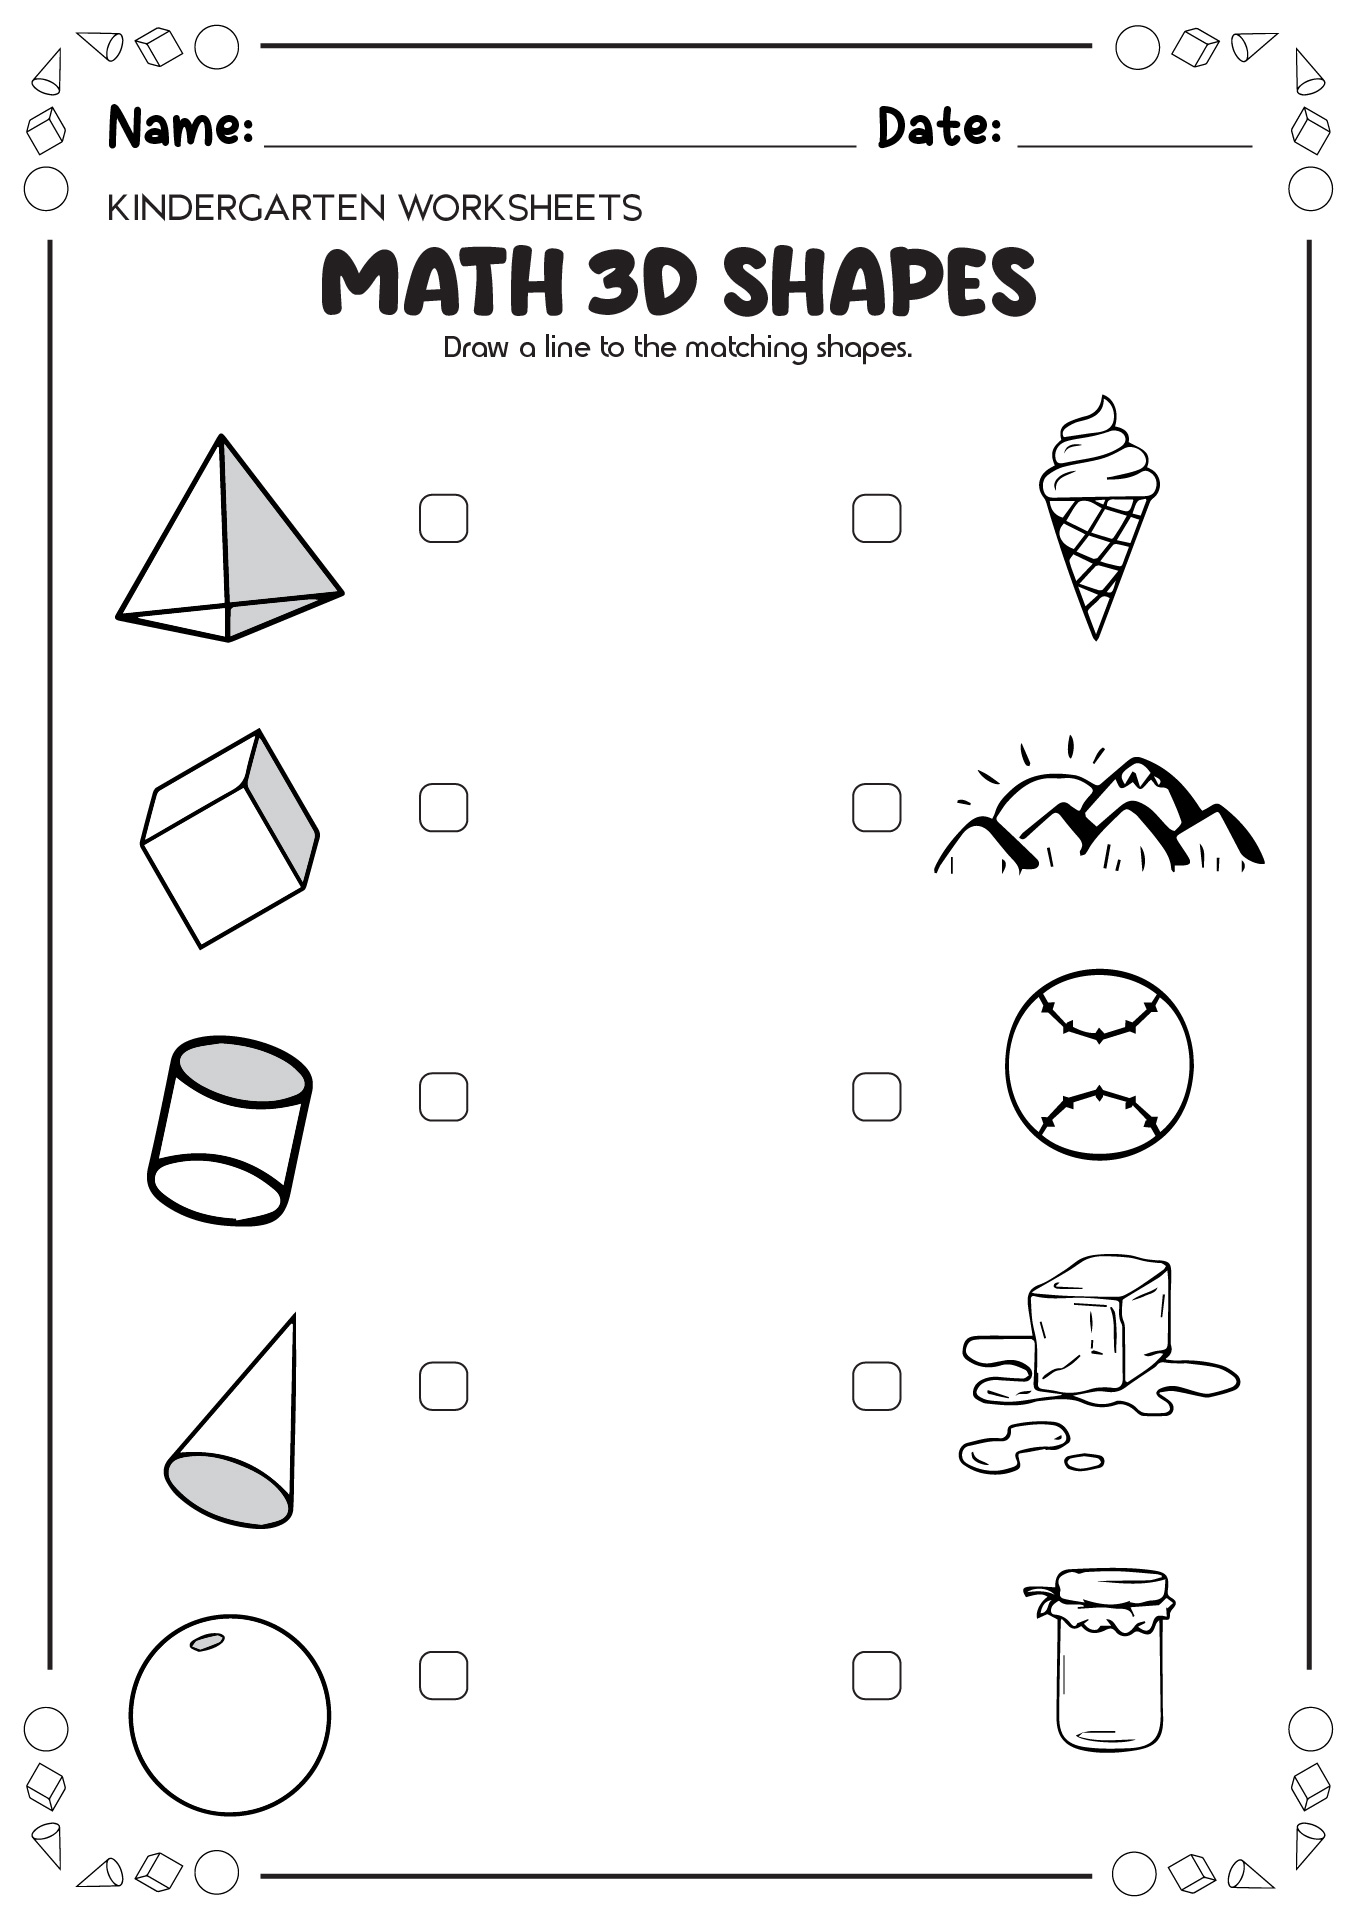 Math 3D Shapes Worksheet